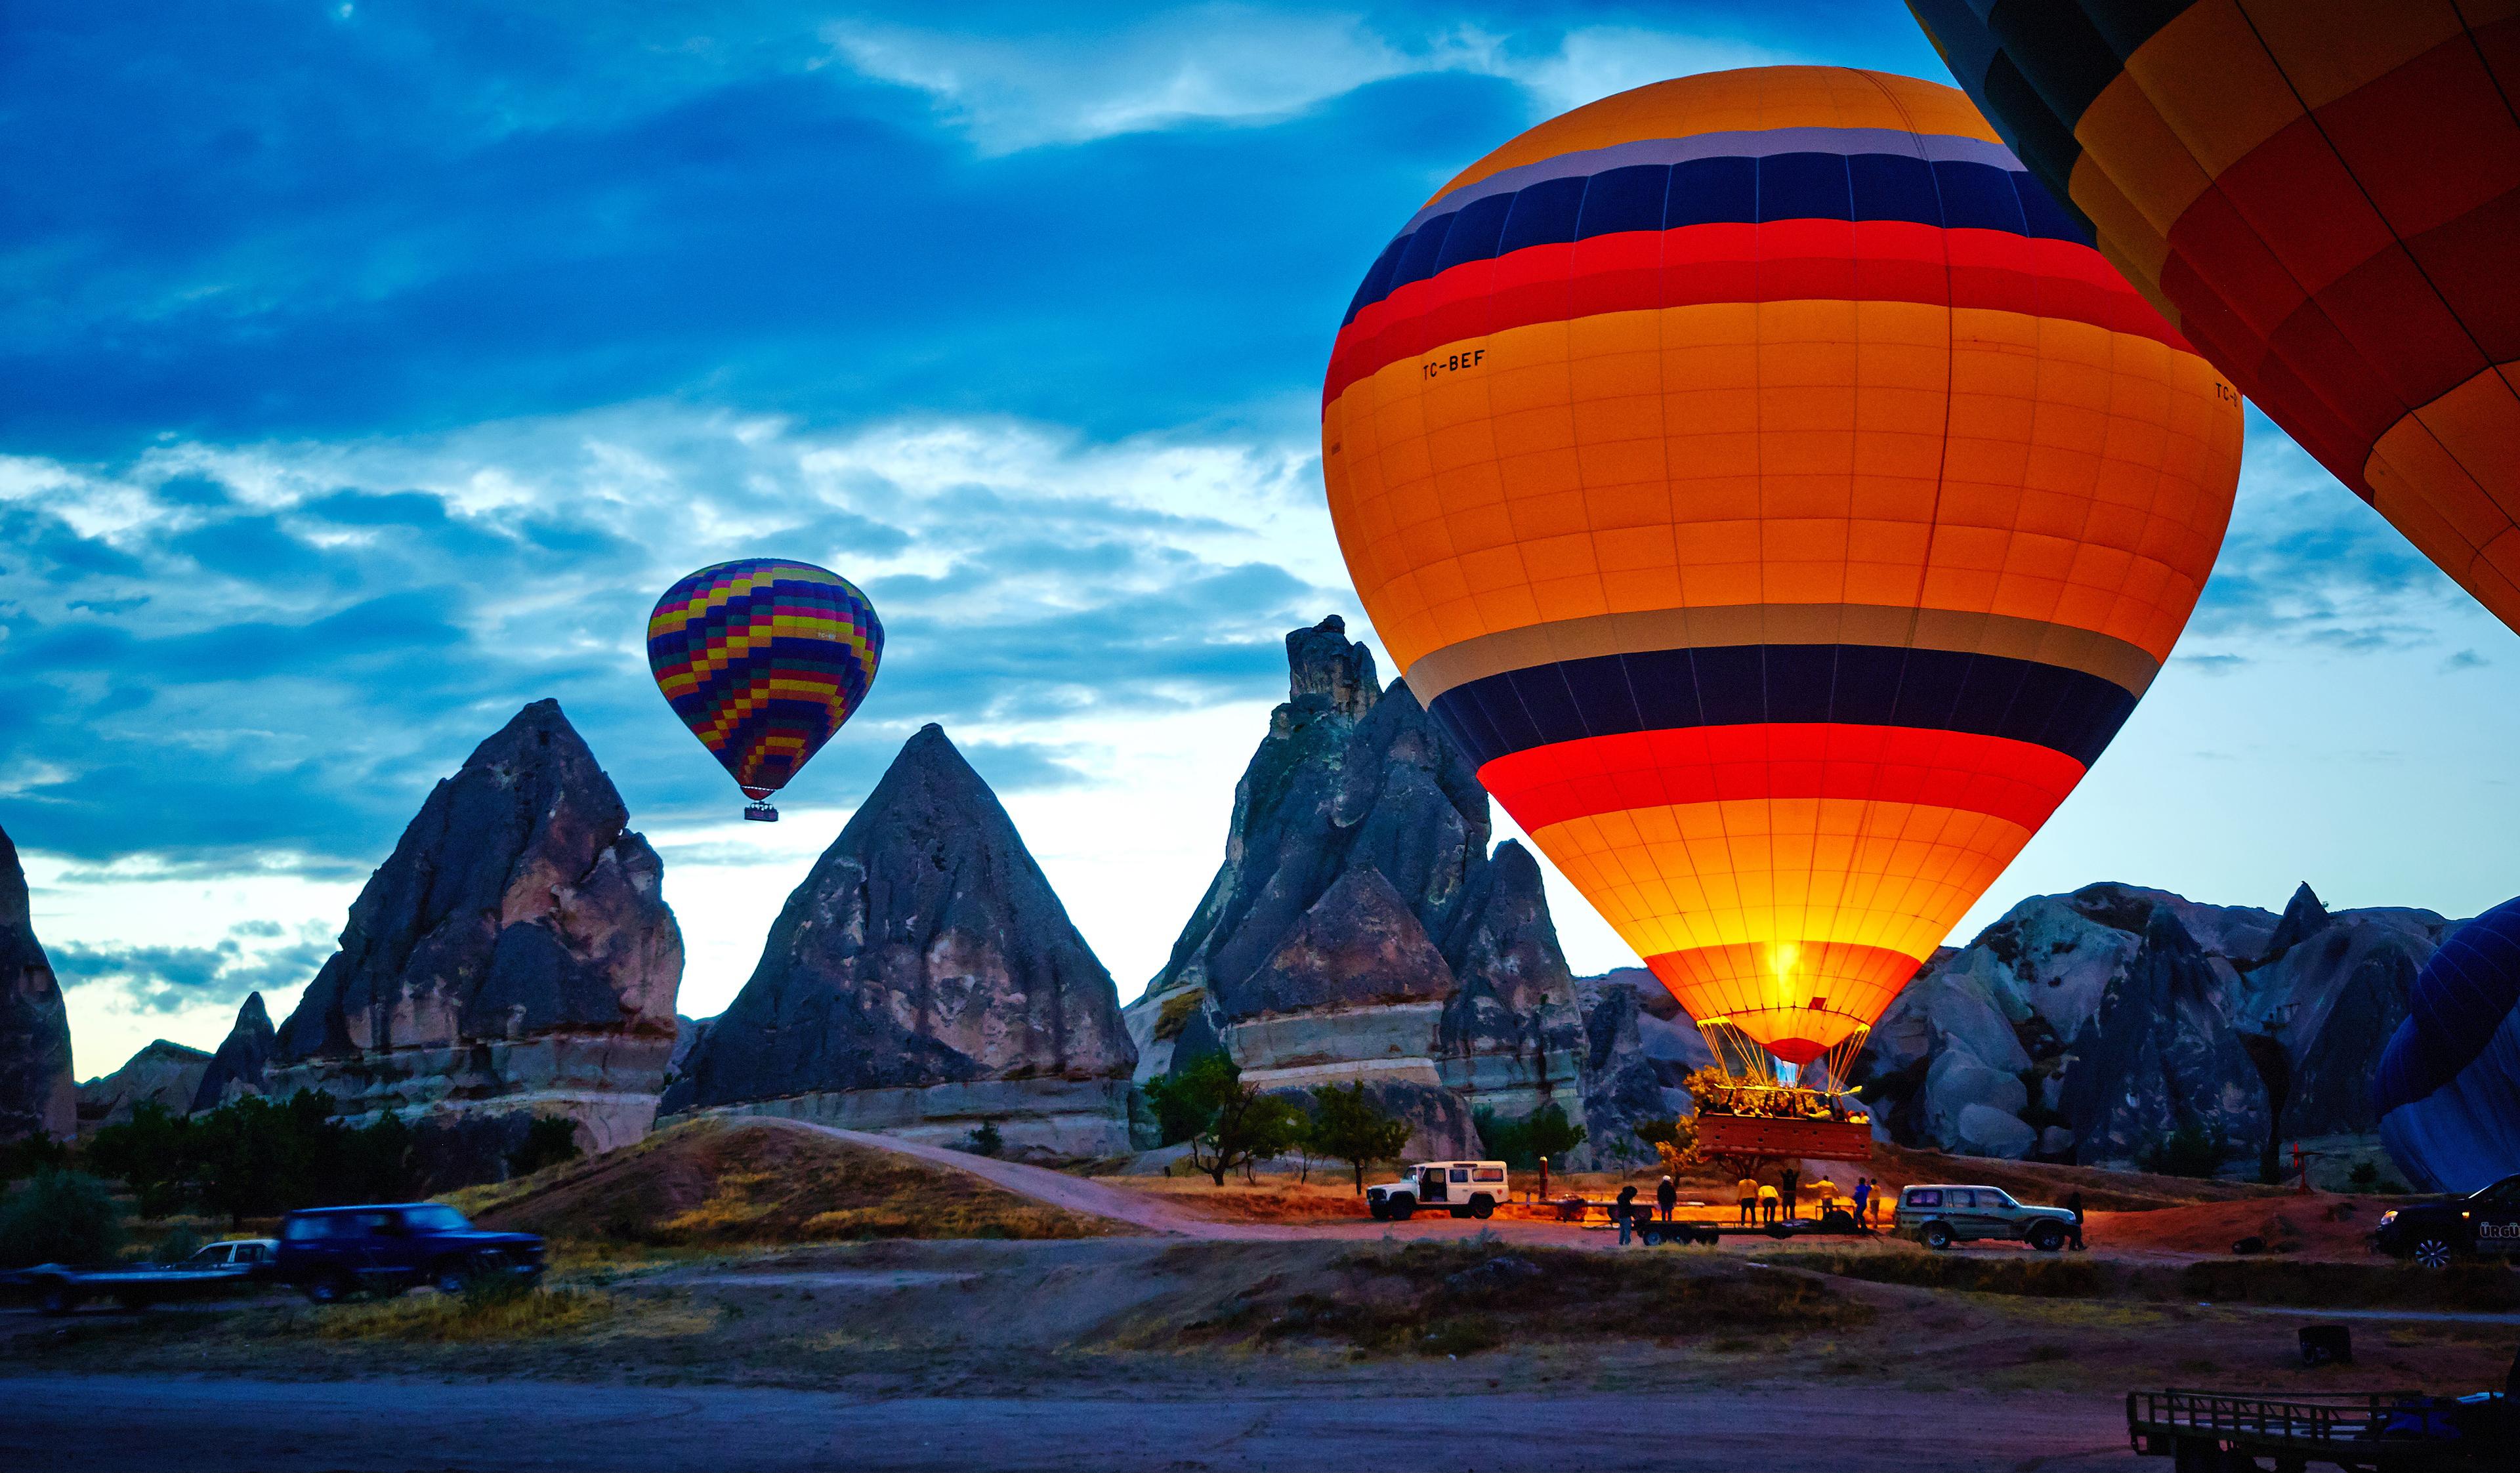 Cappadocia, Turkey Let's Get (Really) High World's Best Hot Air